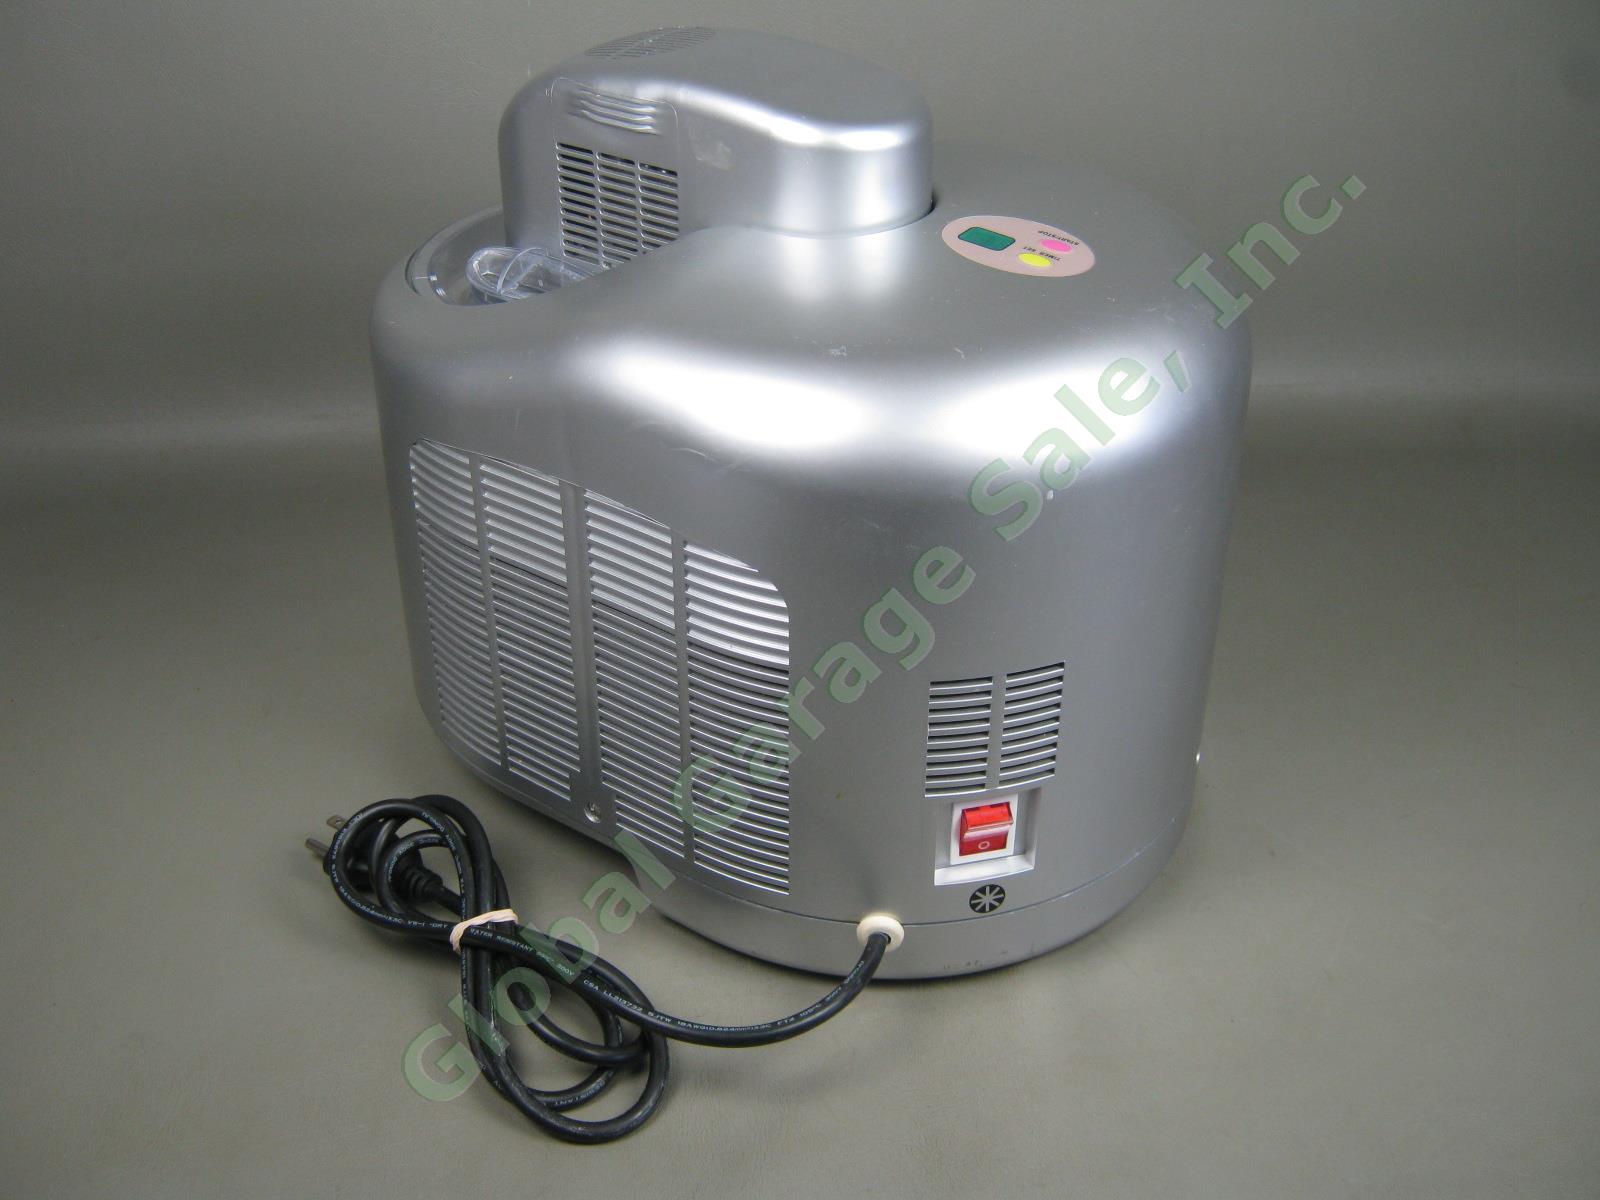 Whynter SNO 2 Qt Quart Compressor Cooling Ice Cream Sorbet Sherbet Maker IC-2L 6